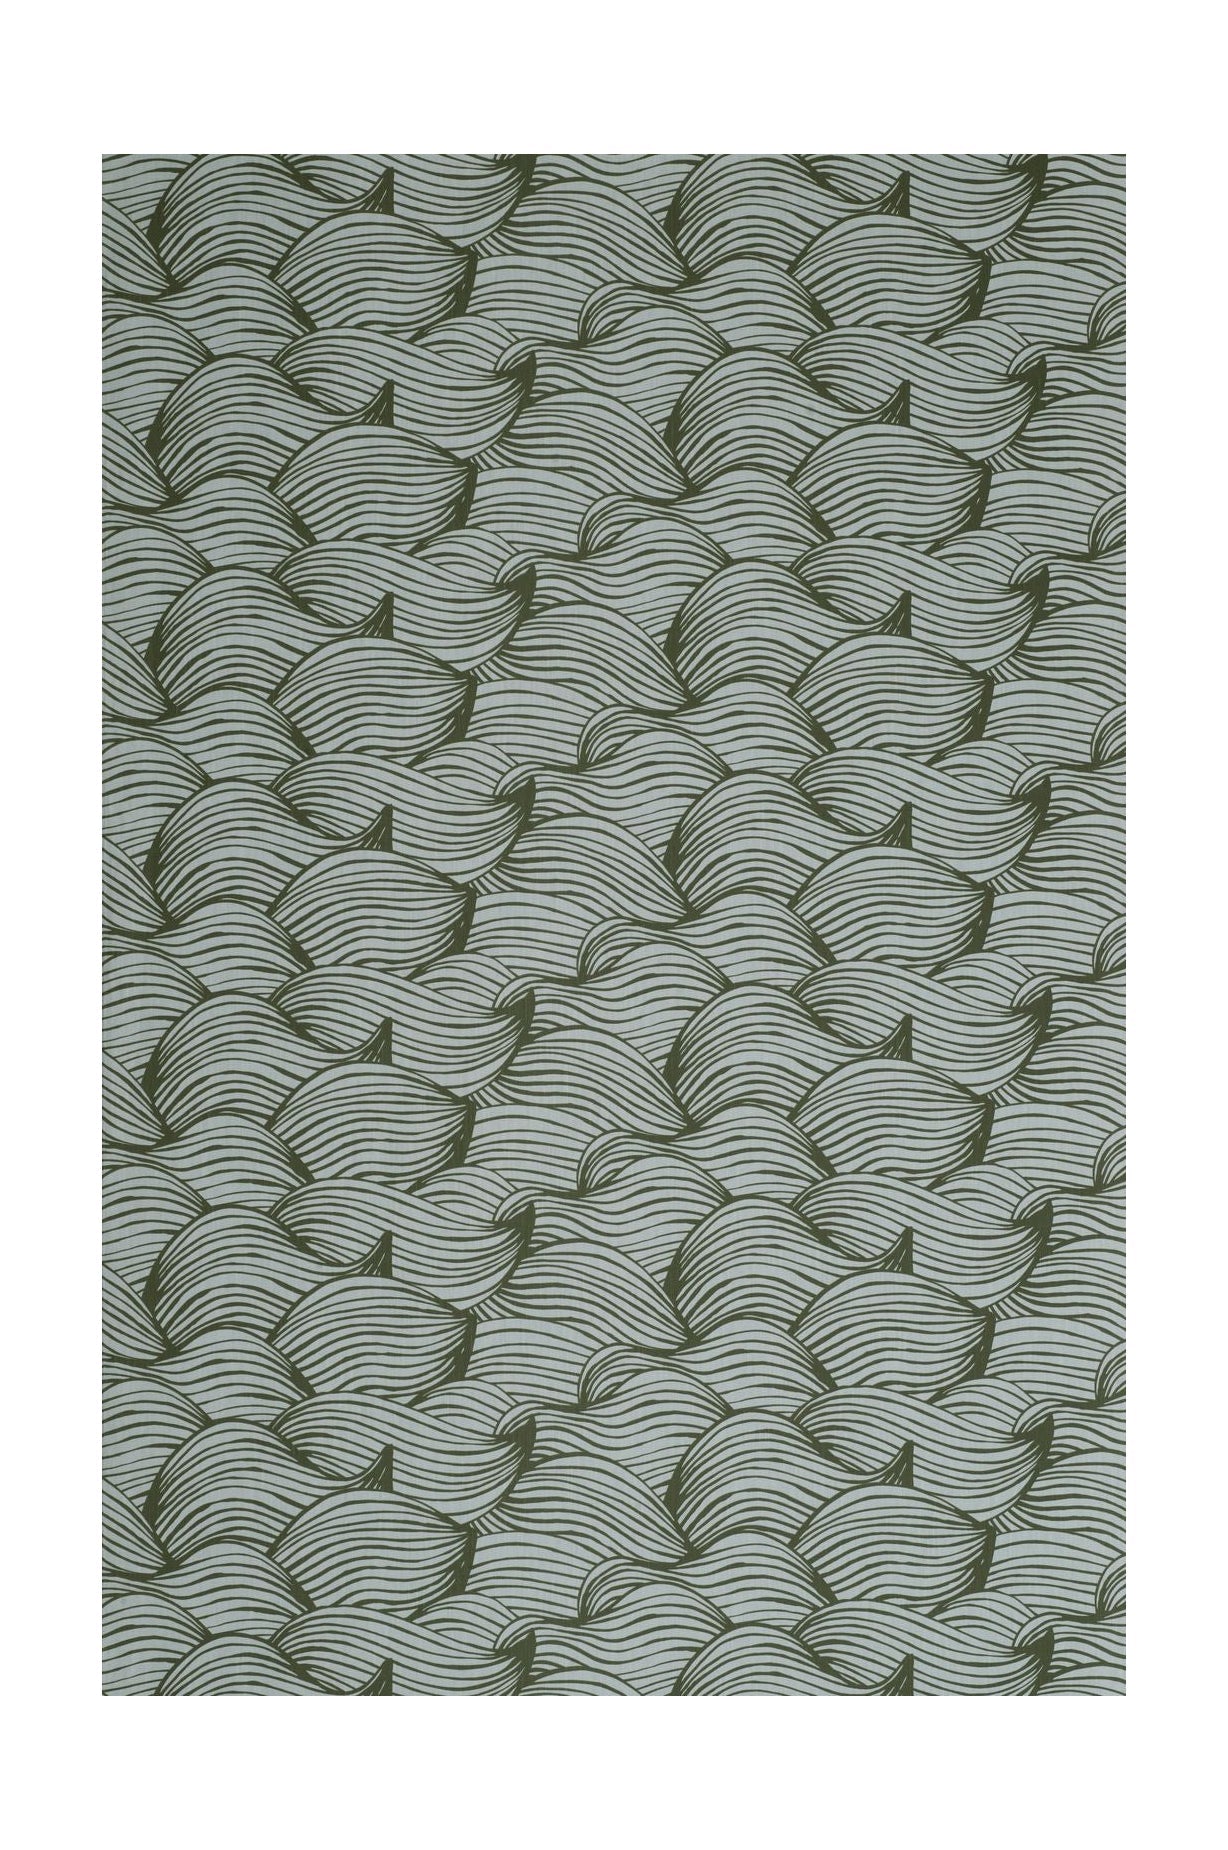 Spira Wave Fabric Ancho de 150 cm (precio por metro), verde